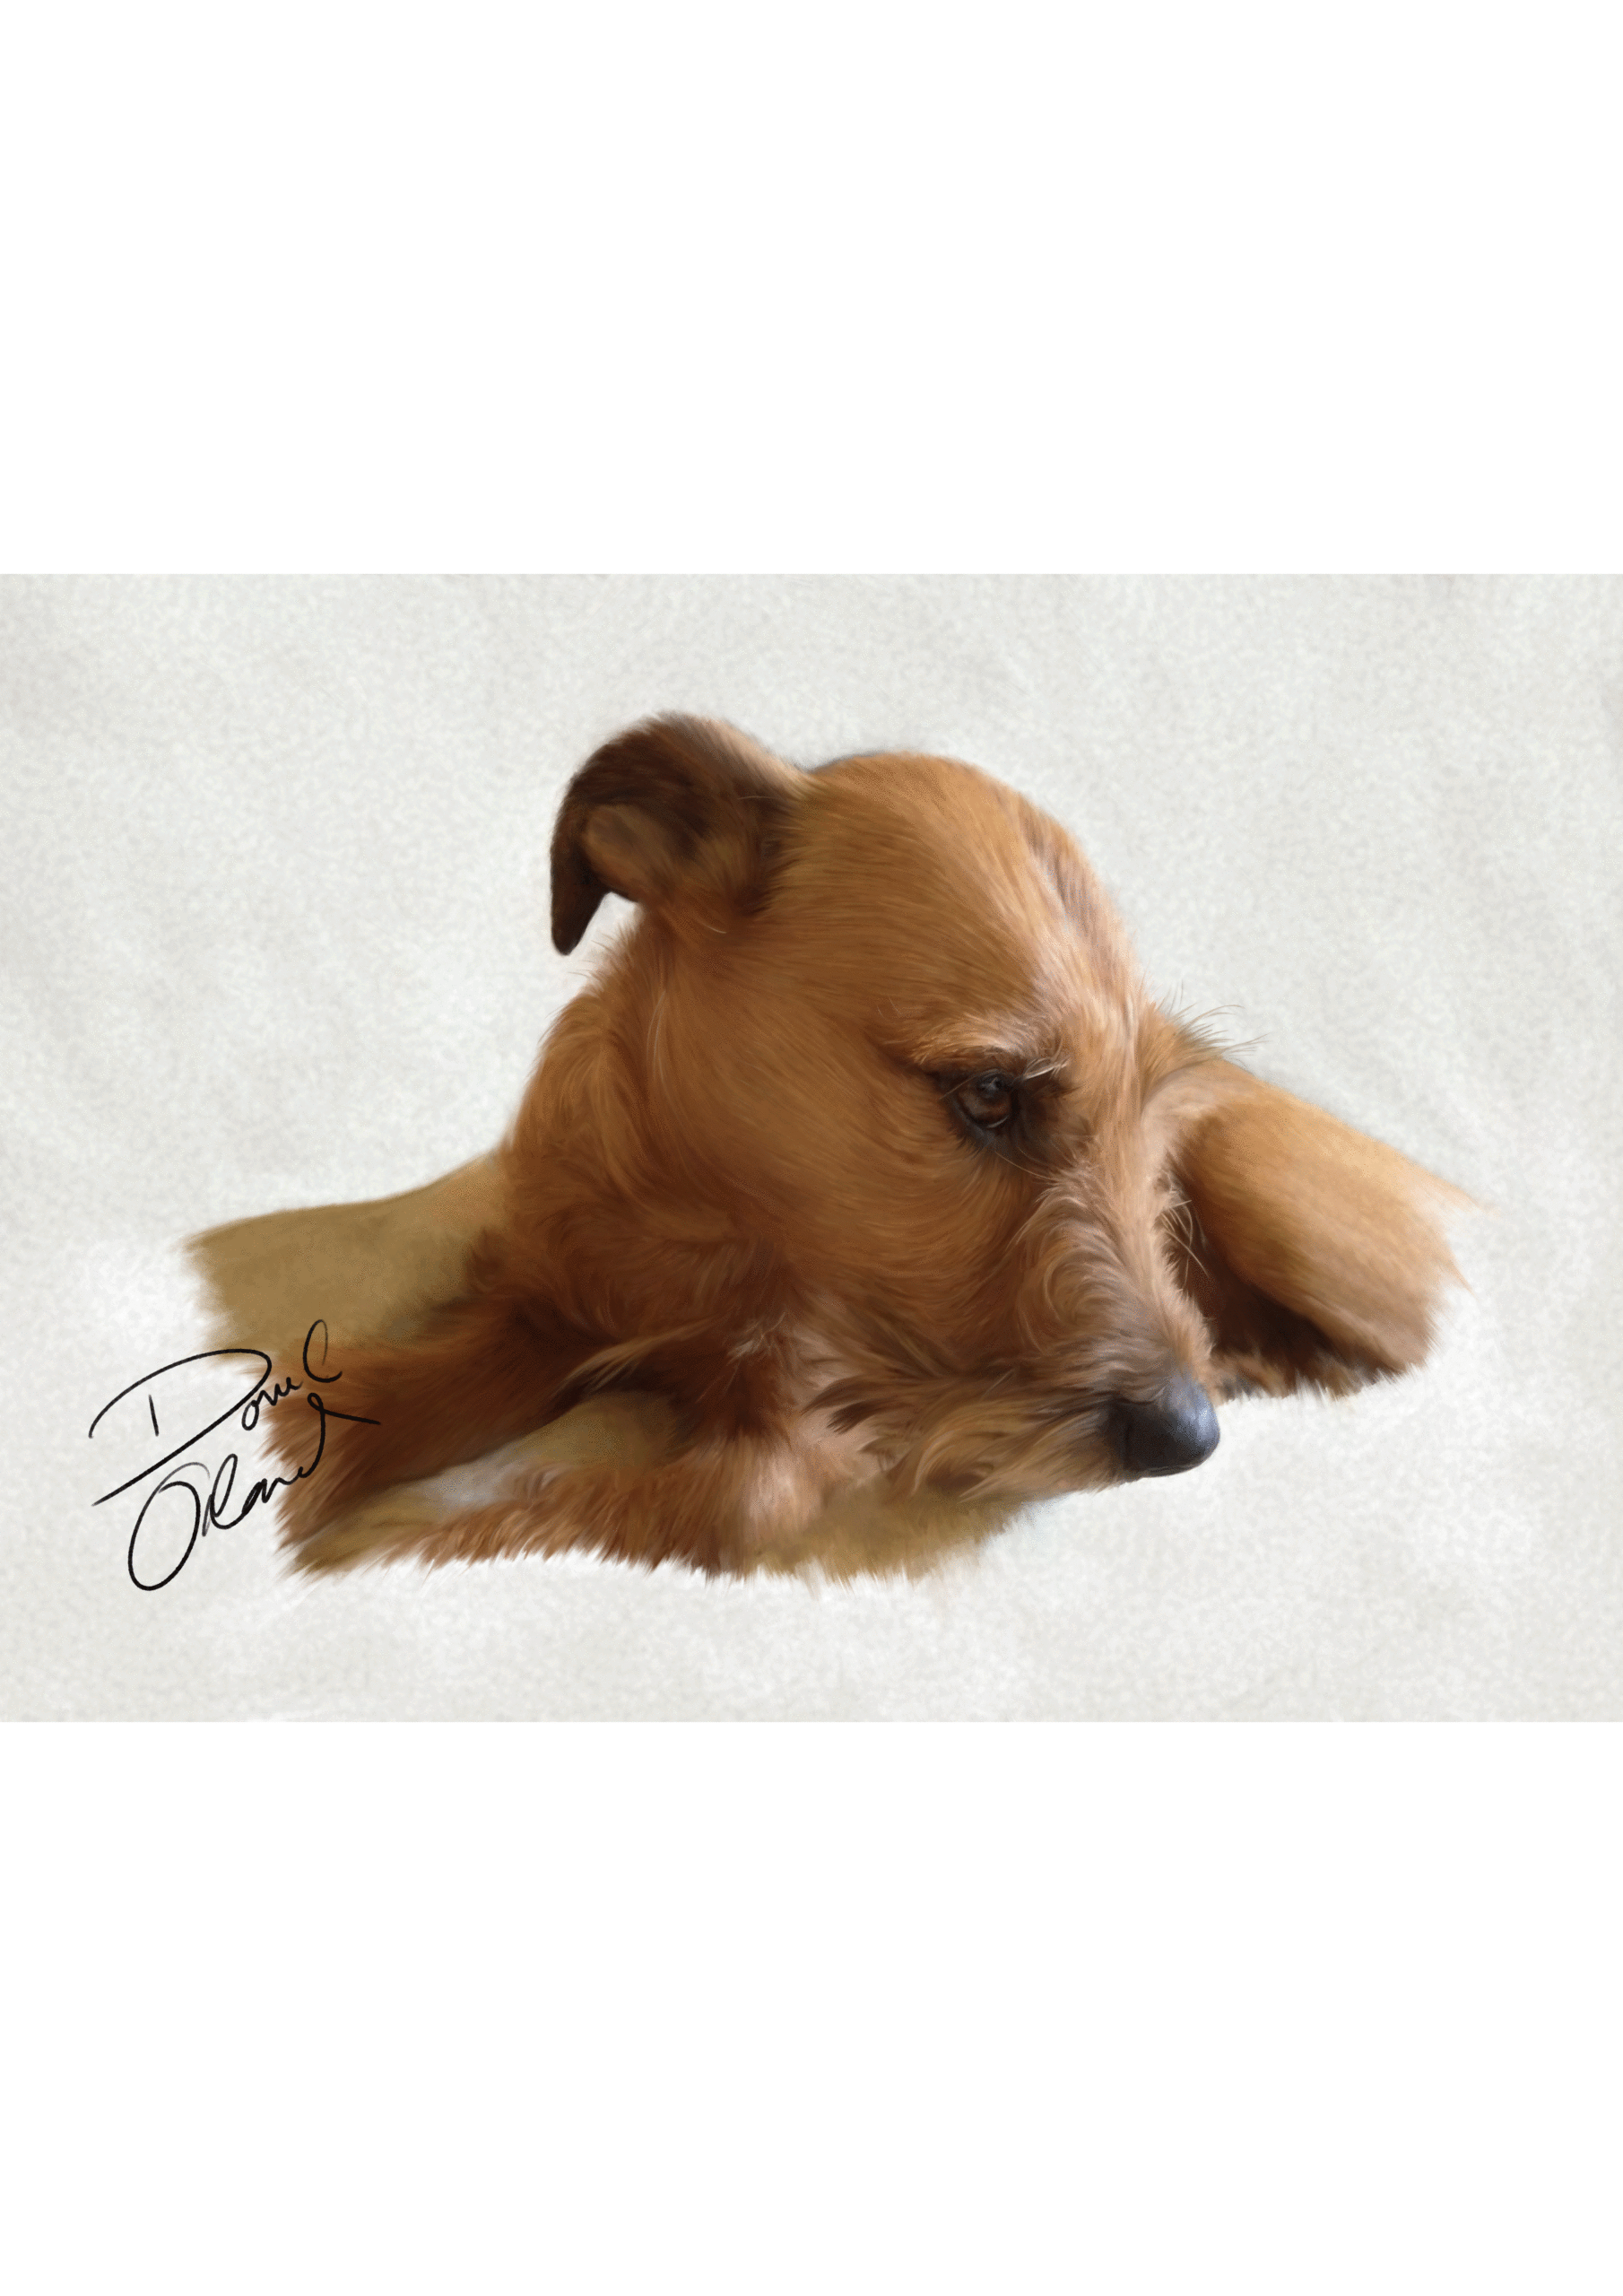 painting of dog portrait - sample 01